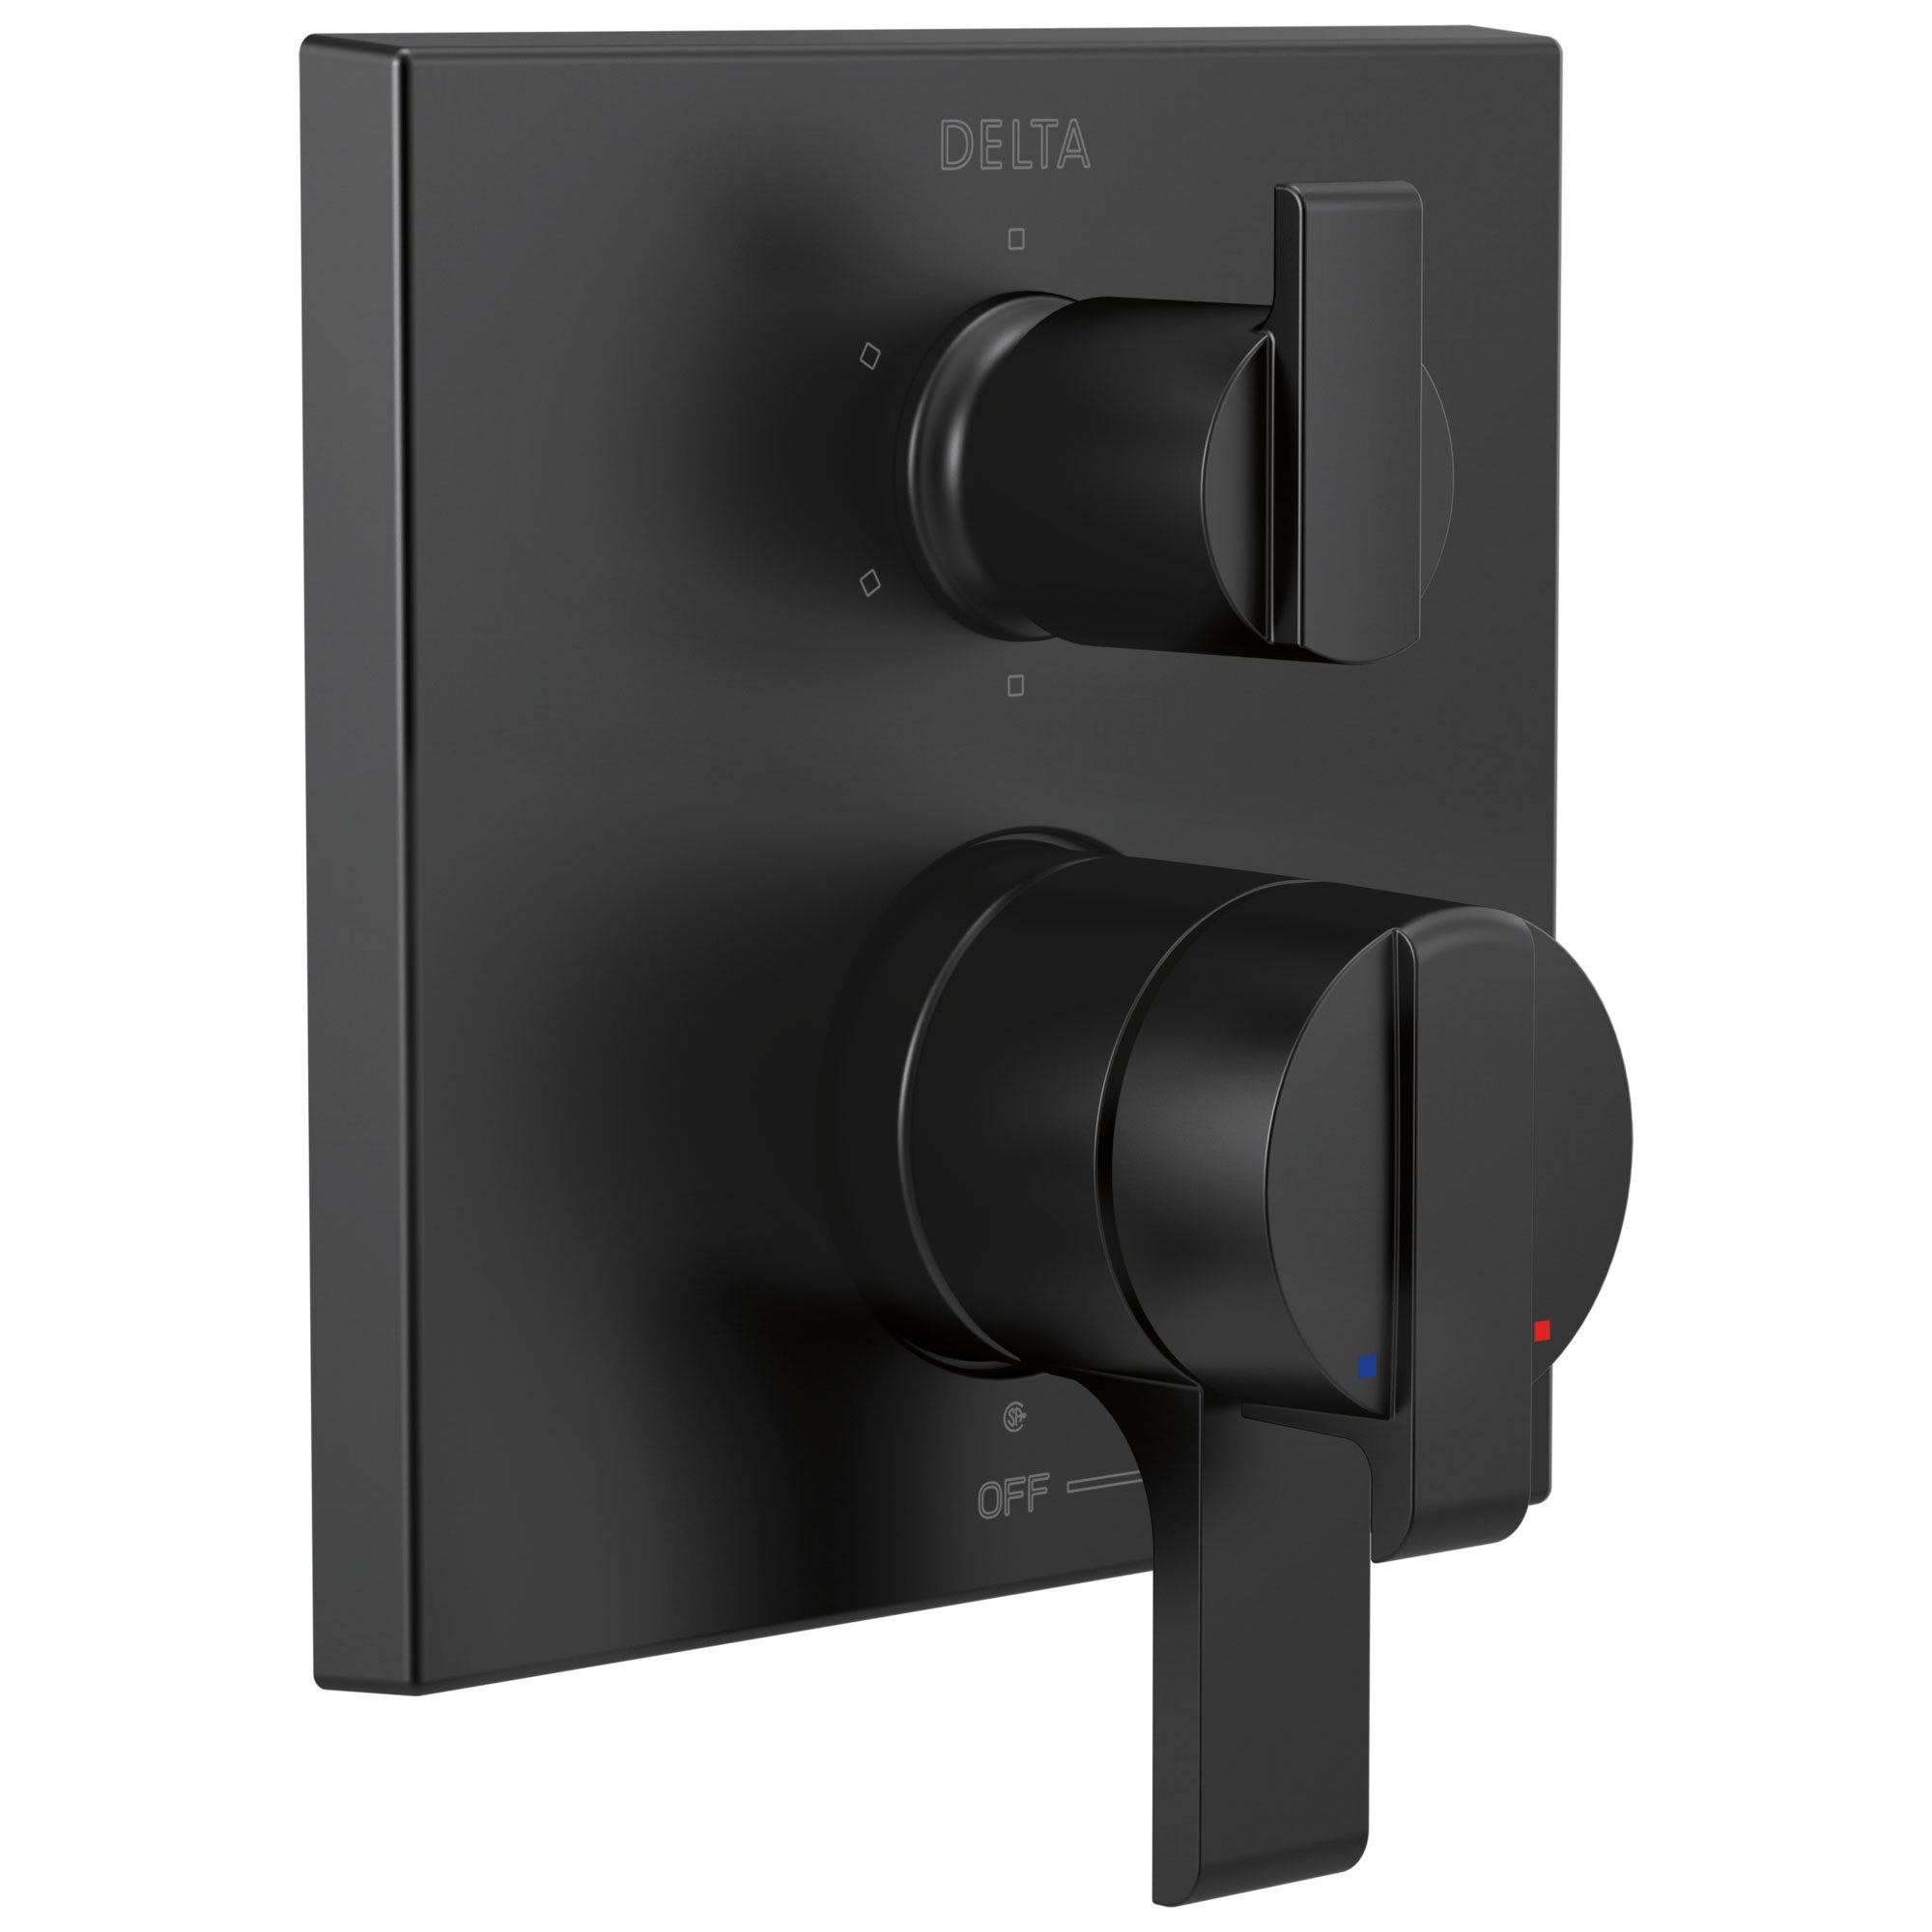 Delta Ara Matte Black Finish Angular Modern 17 Series Shower System Control with 6-Setting Integrated Diverter Includes Valve and Handles D3131V